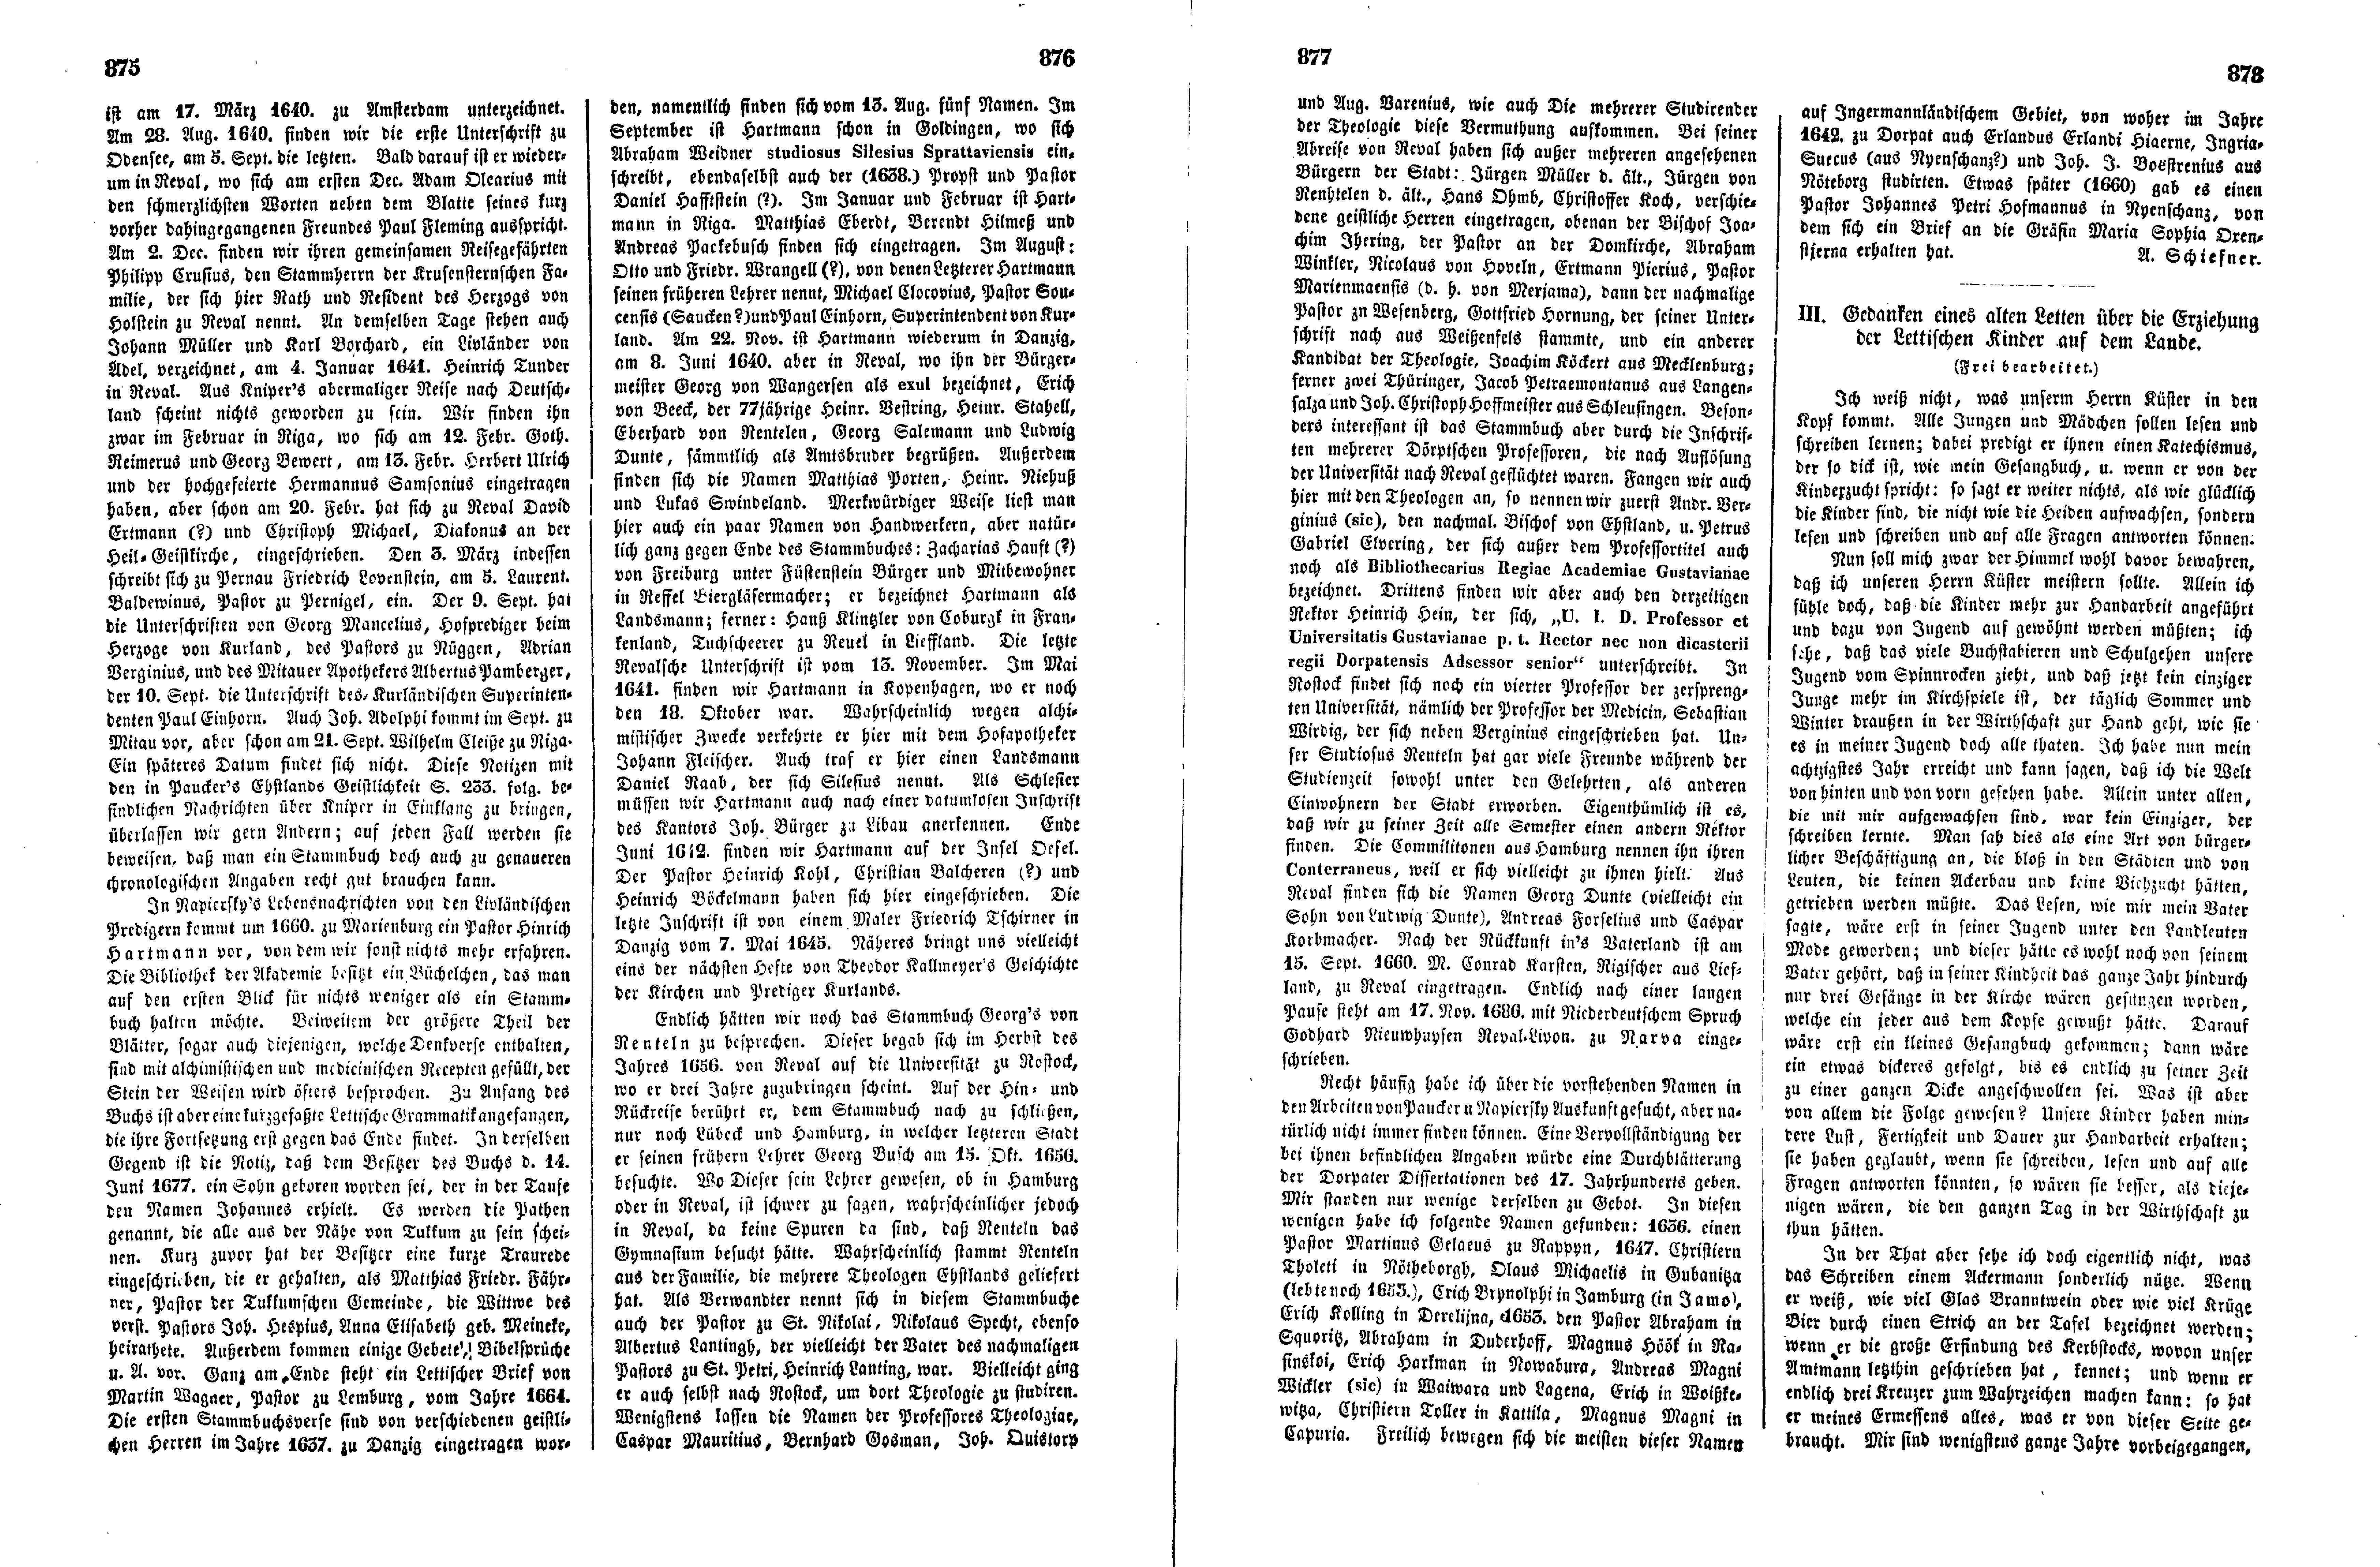 Das Inland [17] (1852) | 224. (875-878) Main body of text